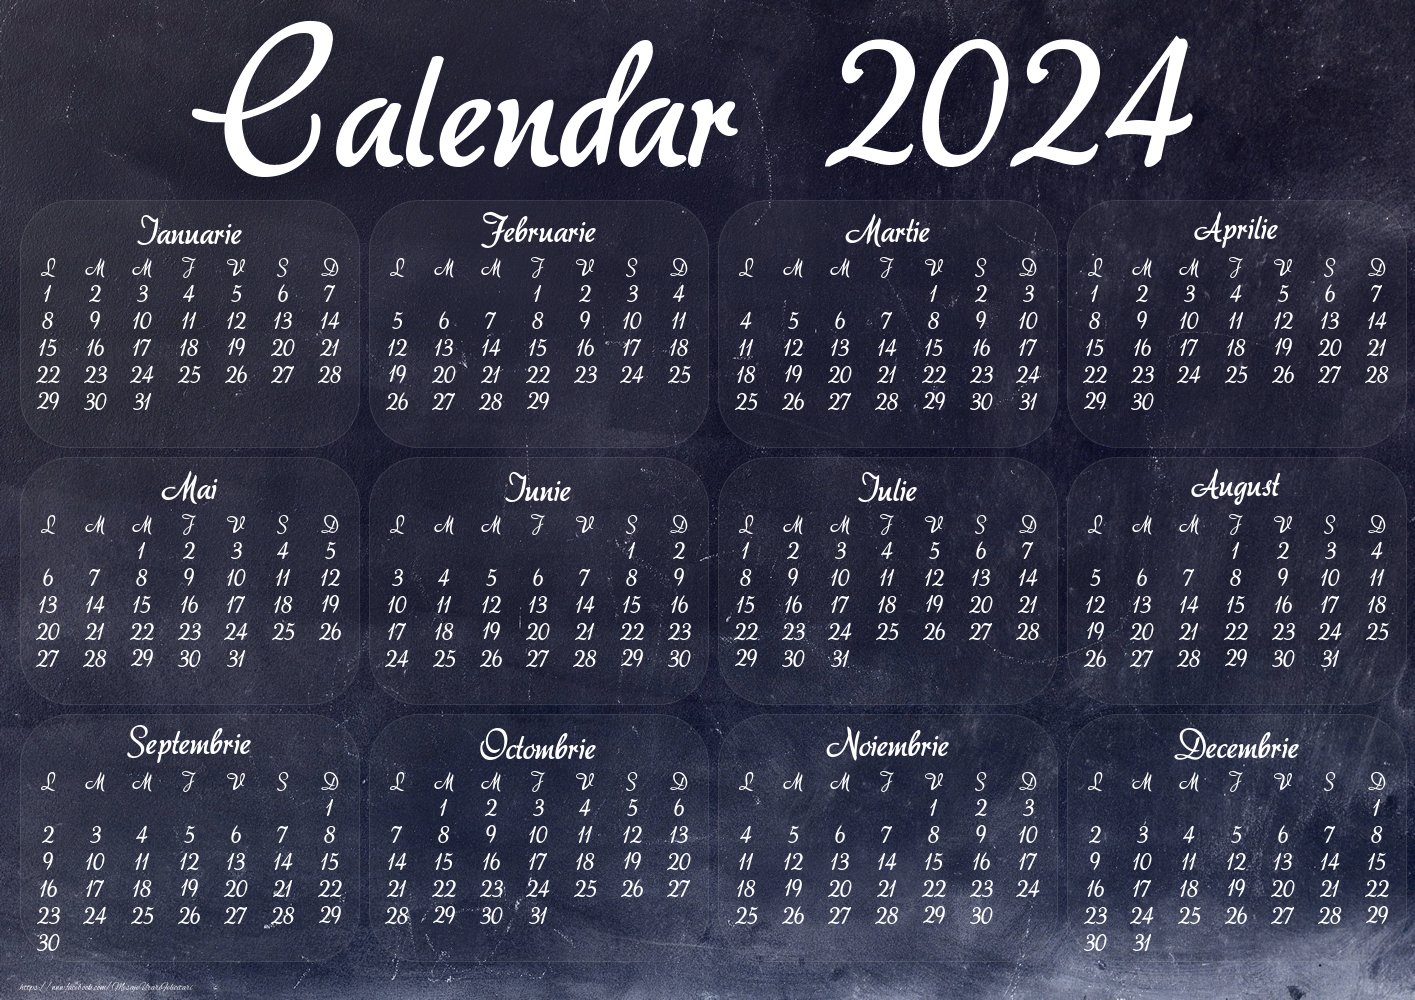 Imagini cu calendare - Calendar 2024 - Black - Model 00109 - mesajeurarifelicitari.com